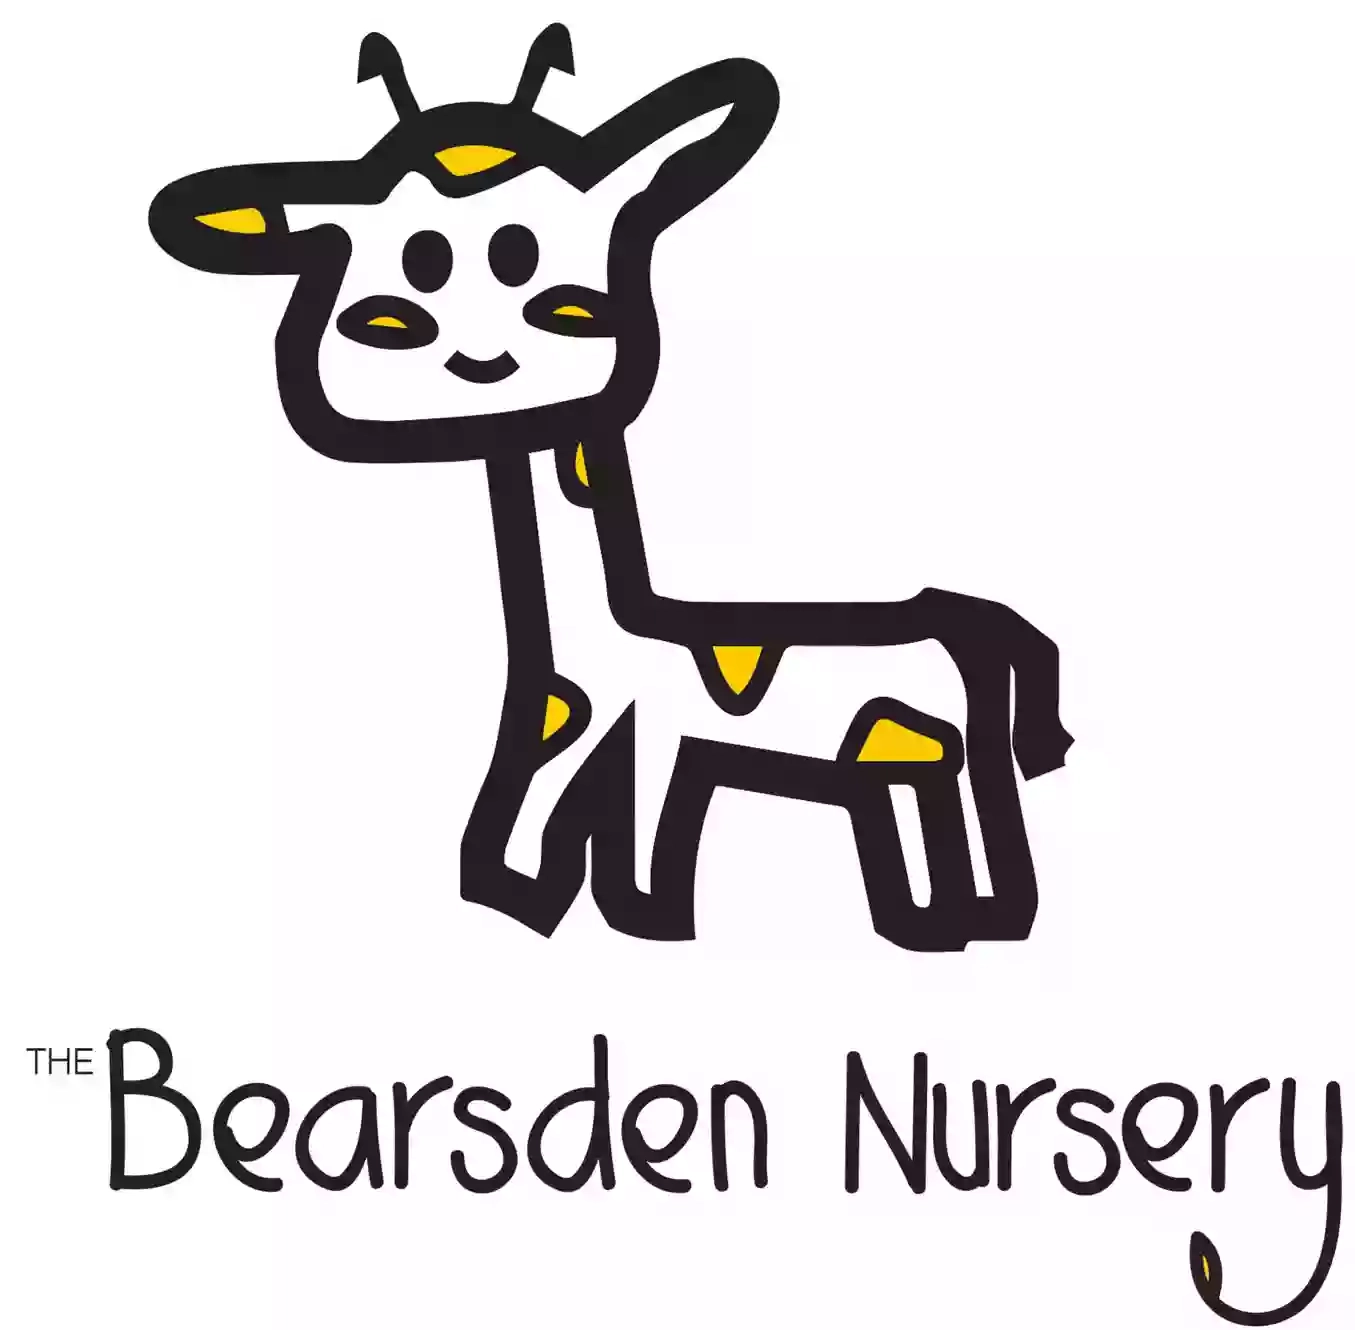 The Bearsden Nursery